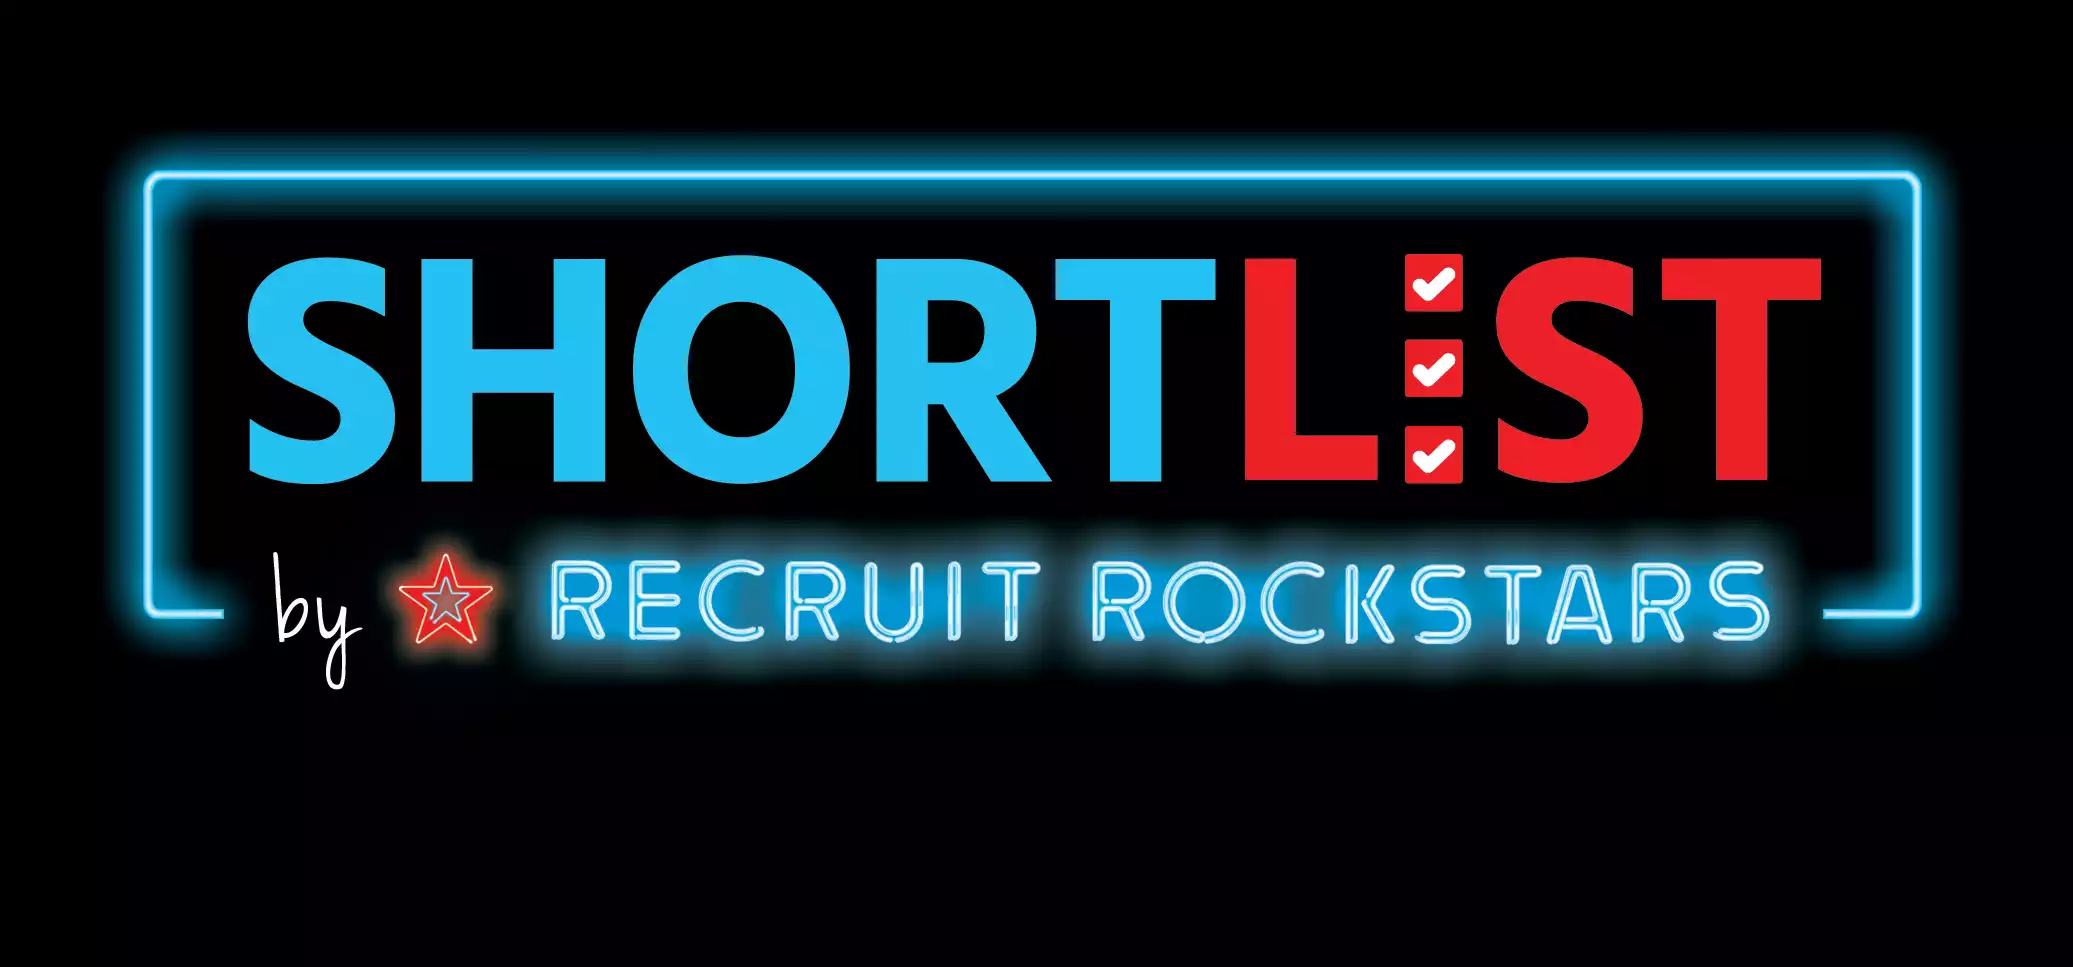 Recruit Rockstars!